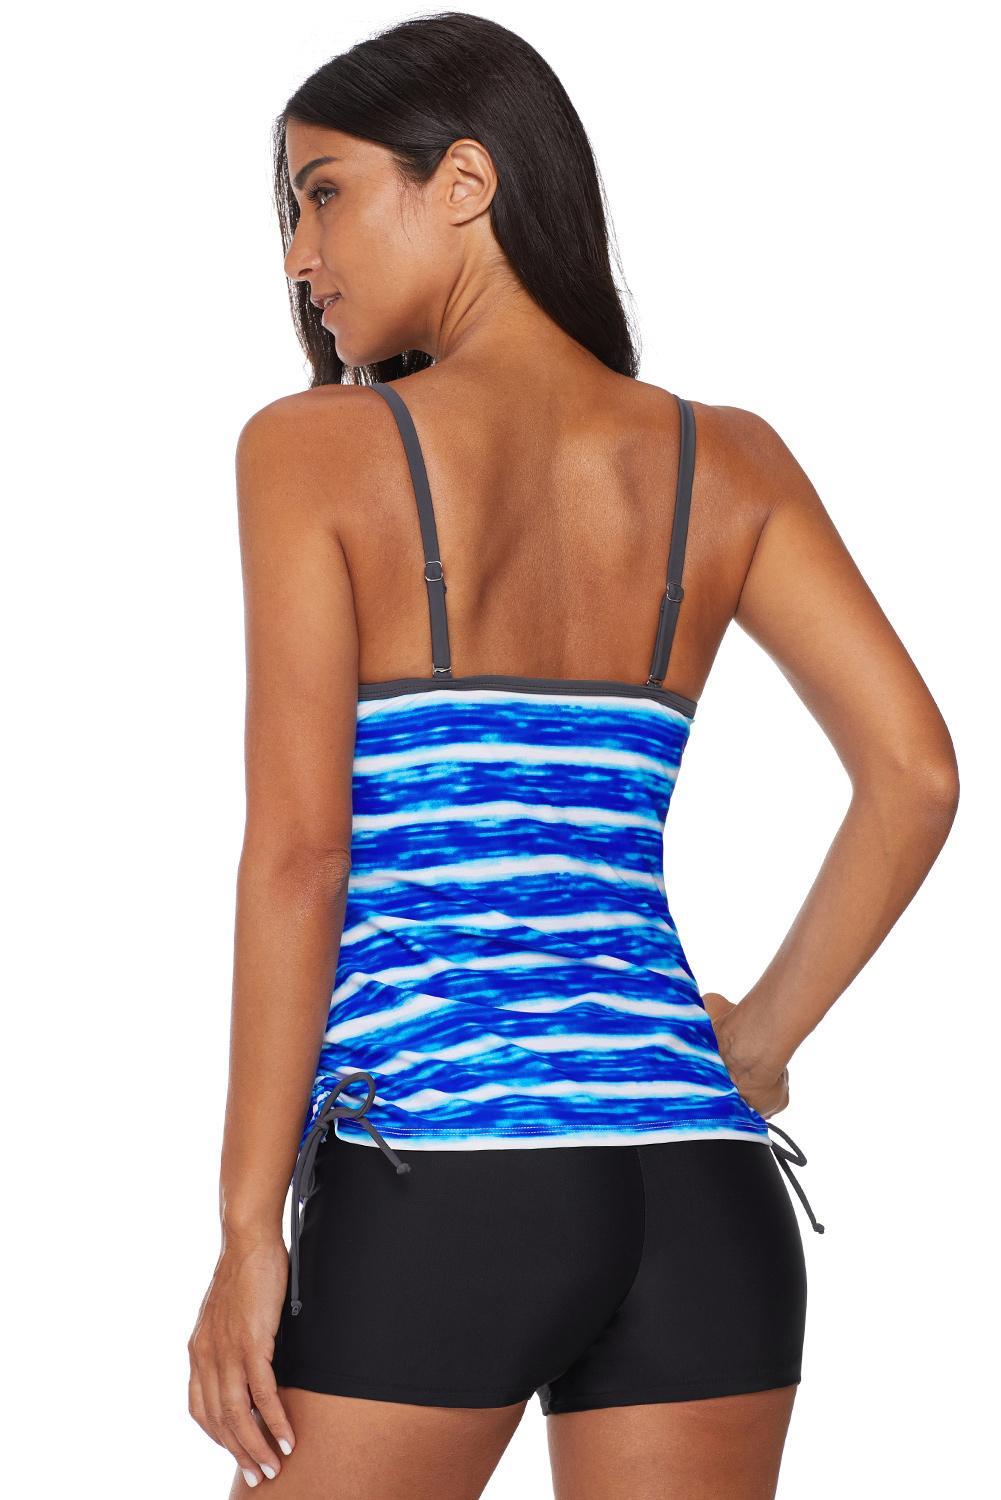 Wholesale Tankinis, Cheap Blue Print Tankini Swimwear Online